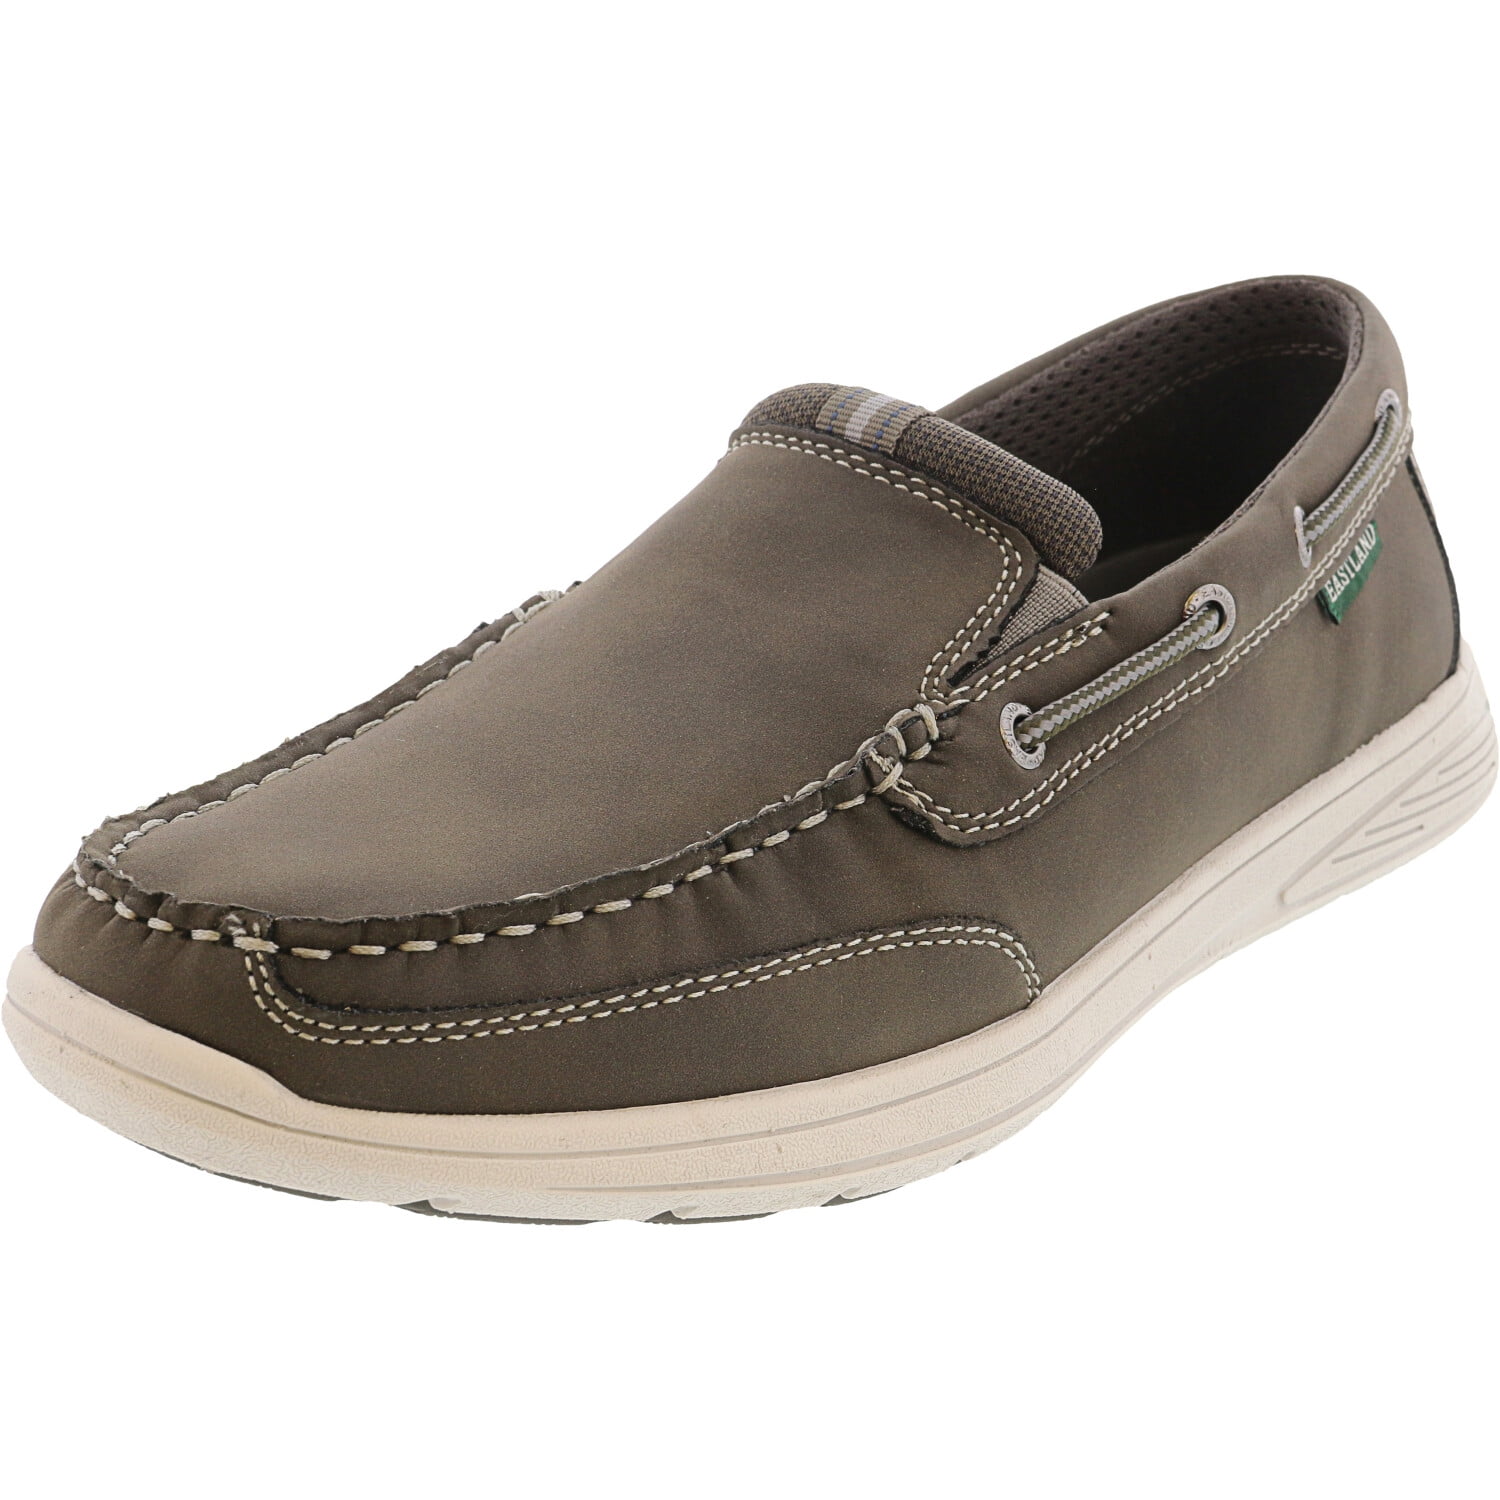 Eastland Men's Brentwood Gray Ankle-High Loafers & Slip-On - 8.5M ...